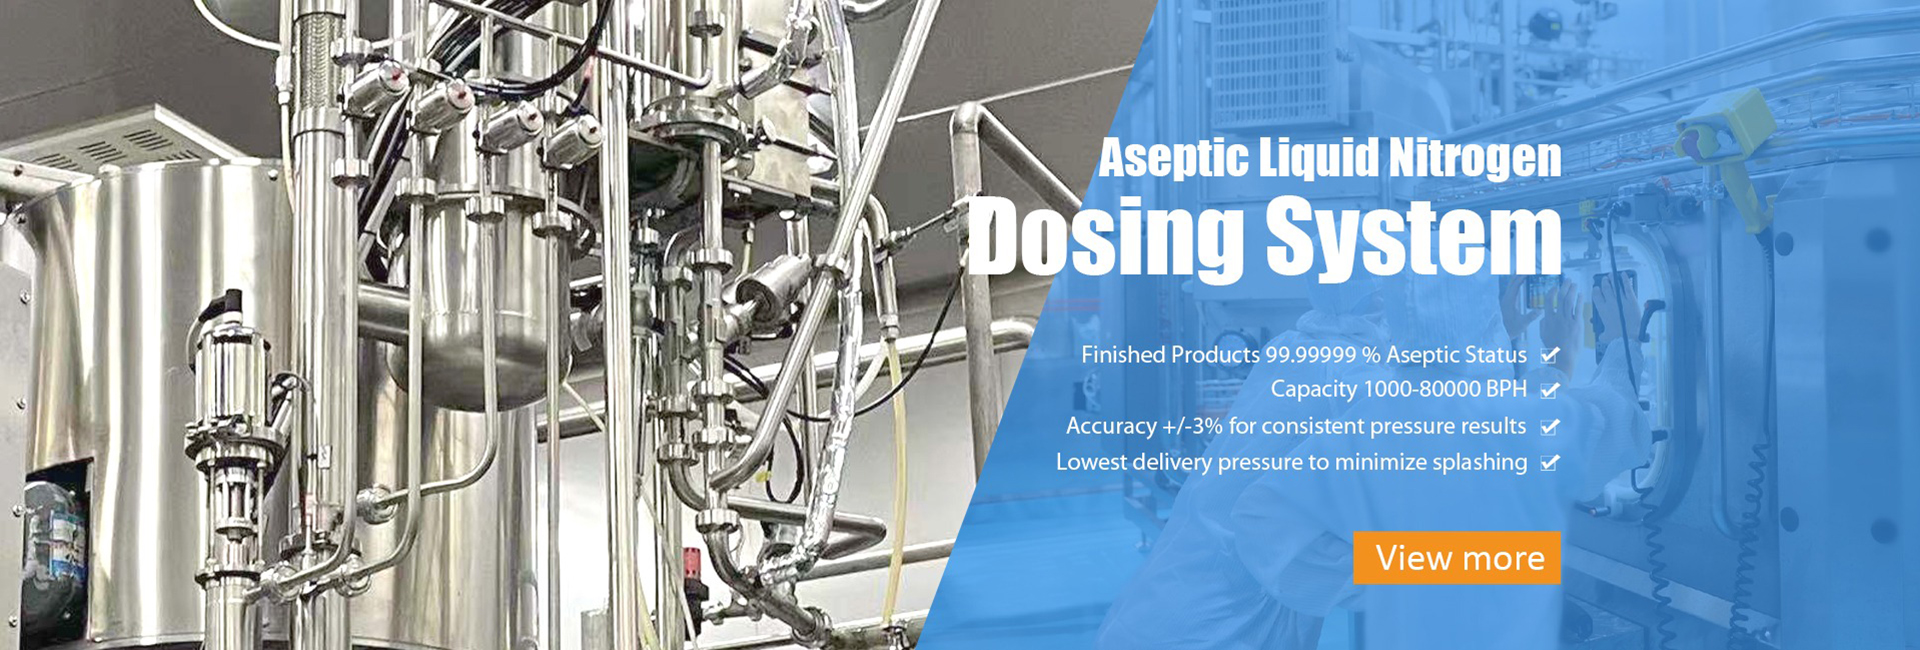 Aseptic liquid nitrogen dosing machine for aseptic filling 